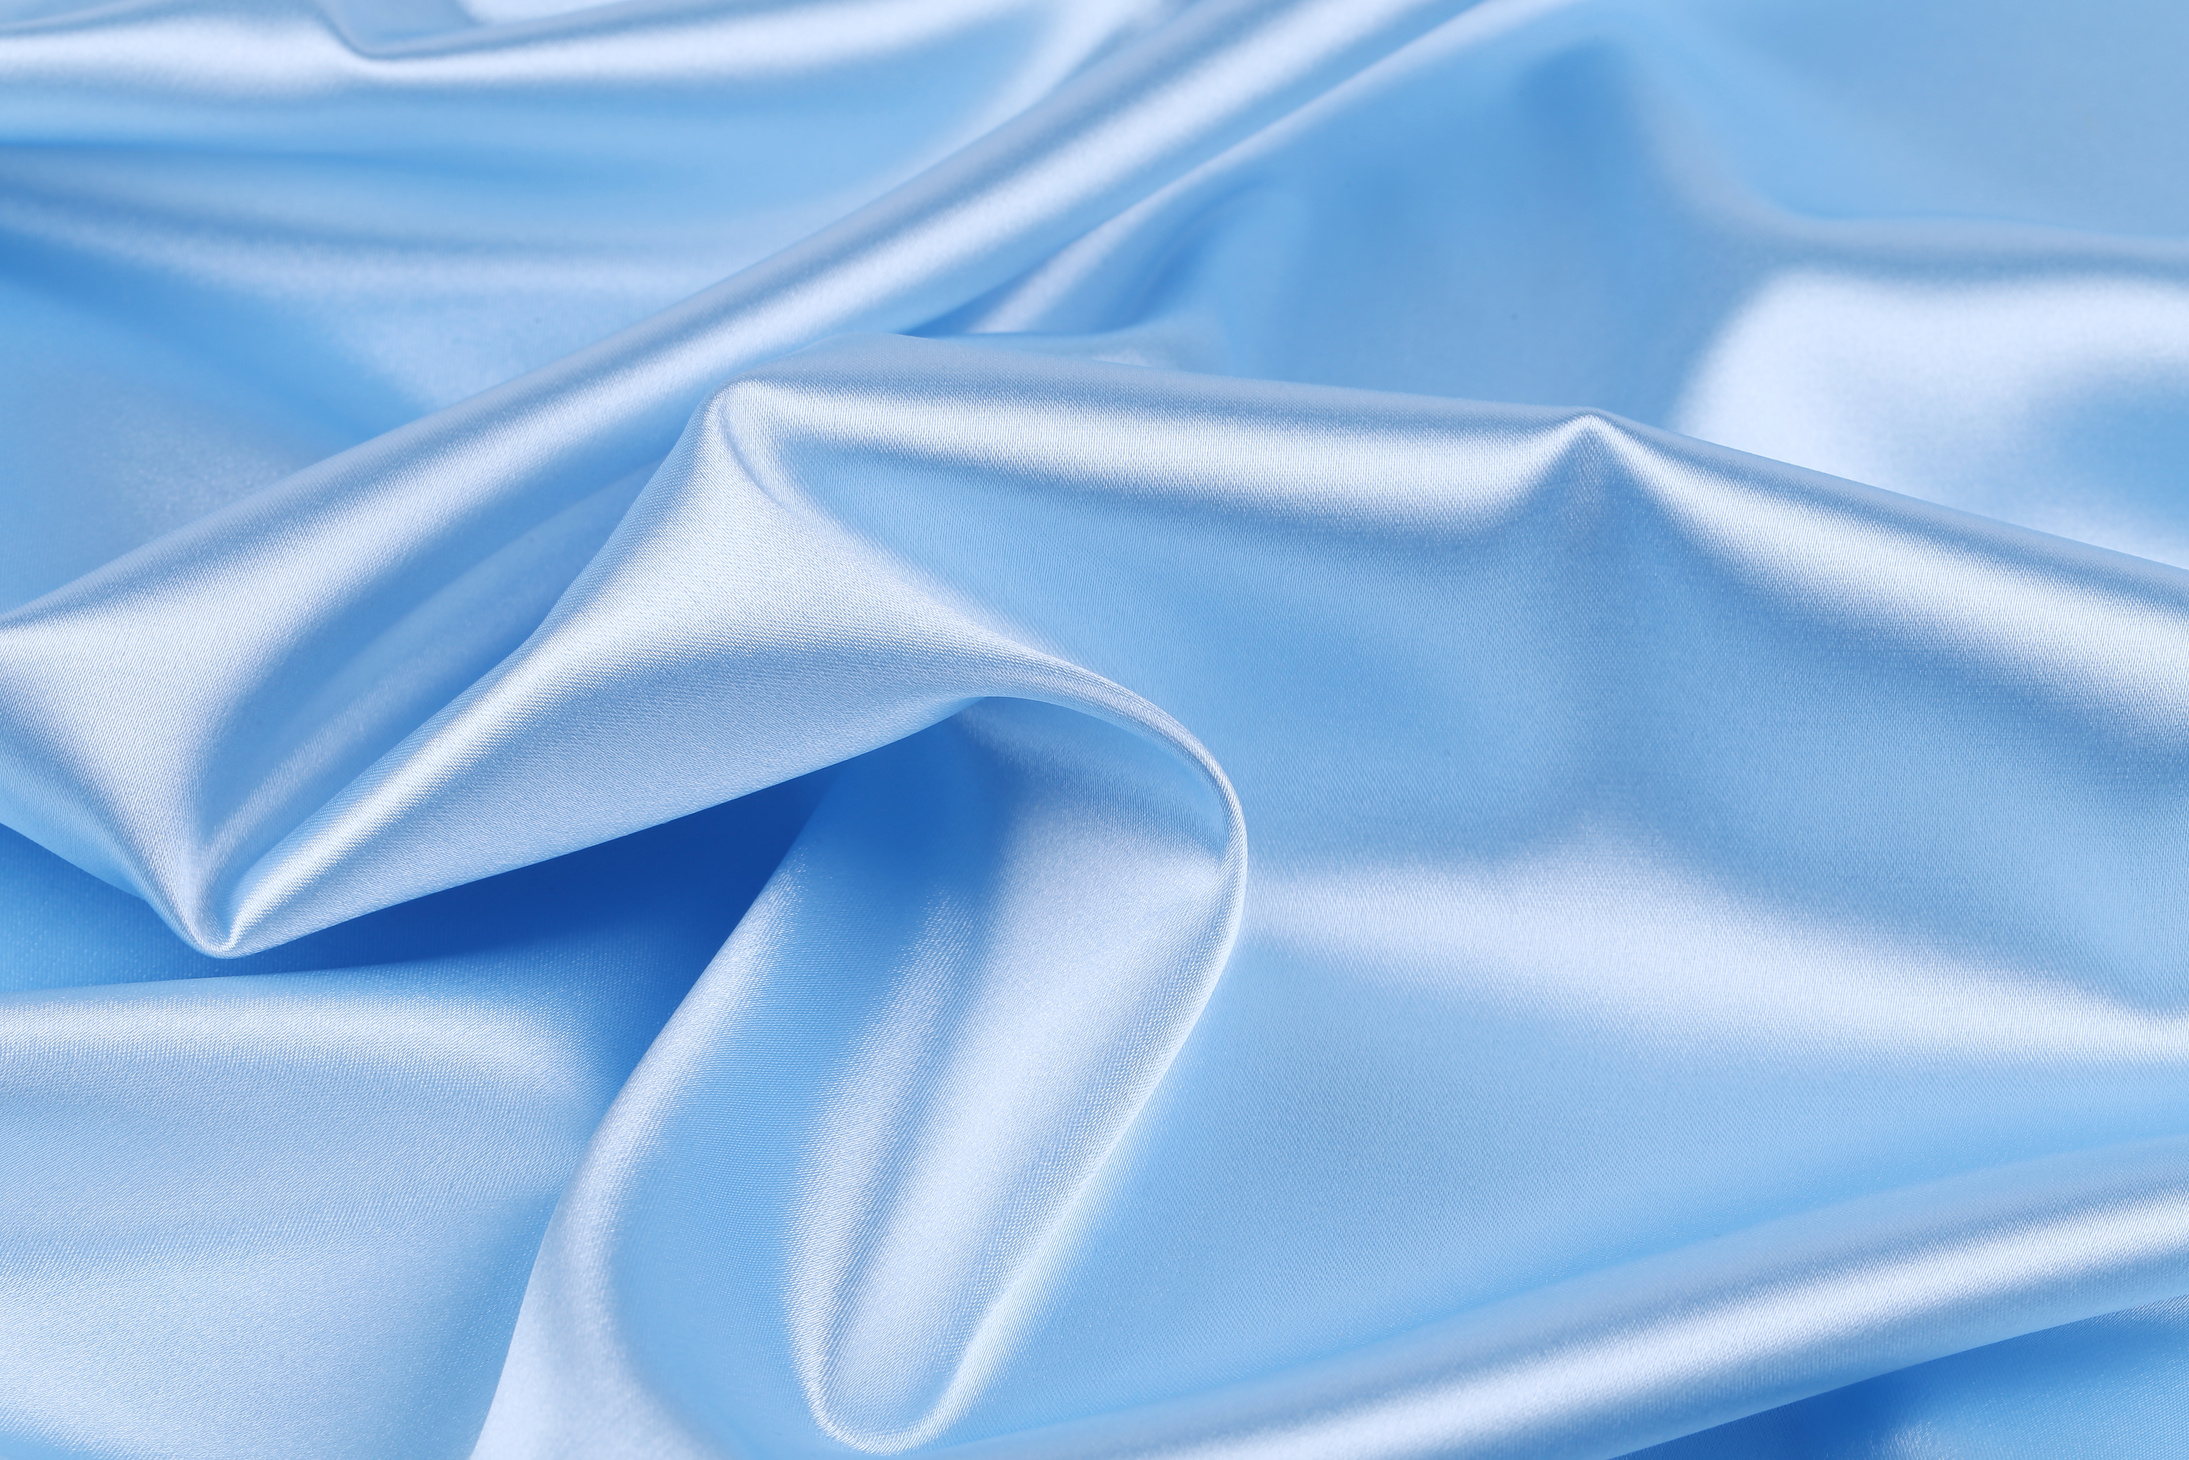 Soft folds and highlights of light blue silk.